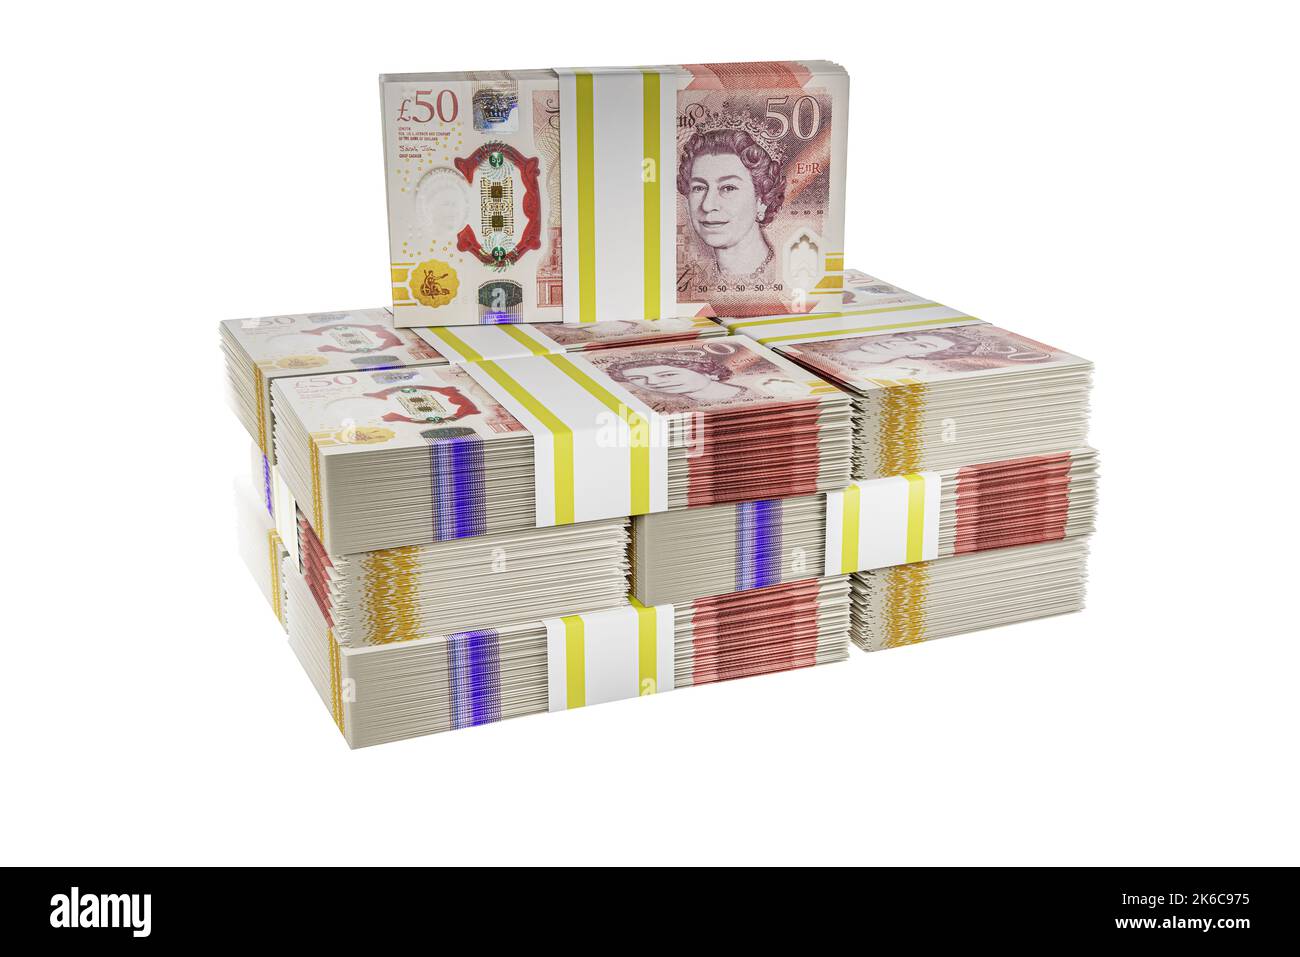 pile piles of UK money stack stacks of british polymer £50 notes bundle bundles of fifty pound banknotes Stock Photo